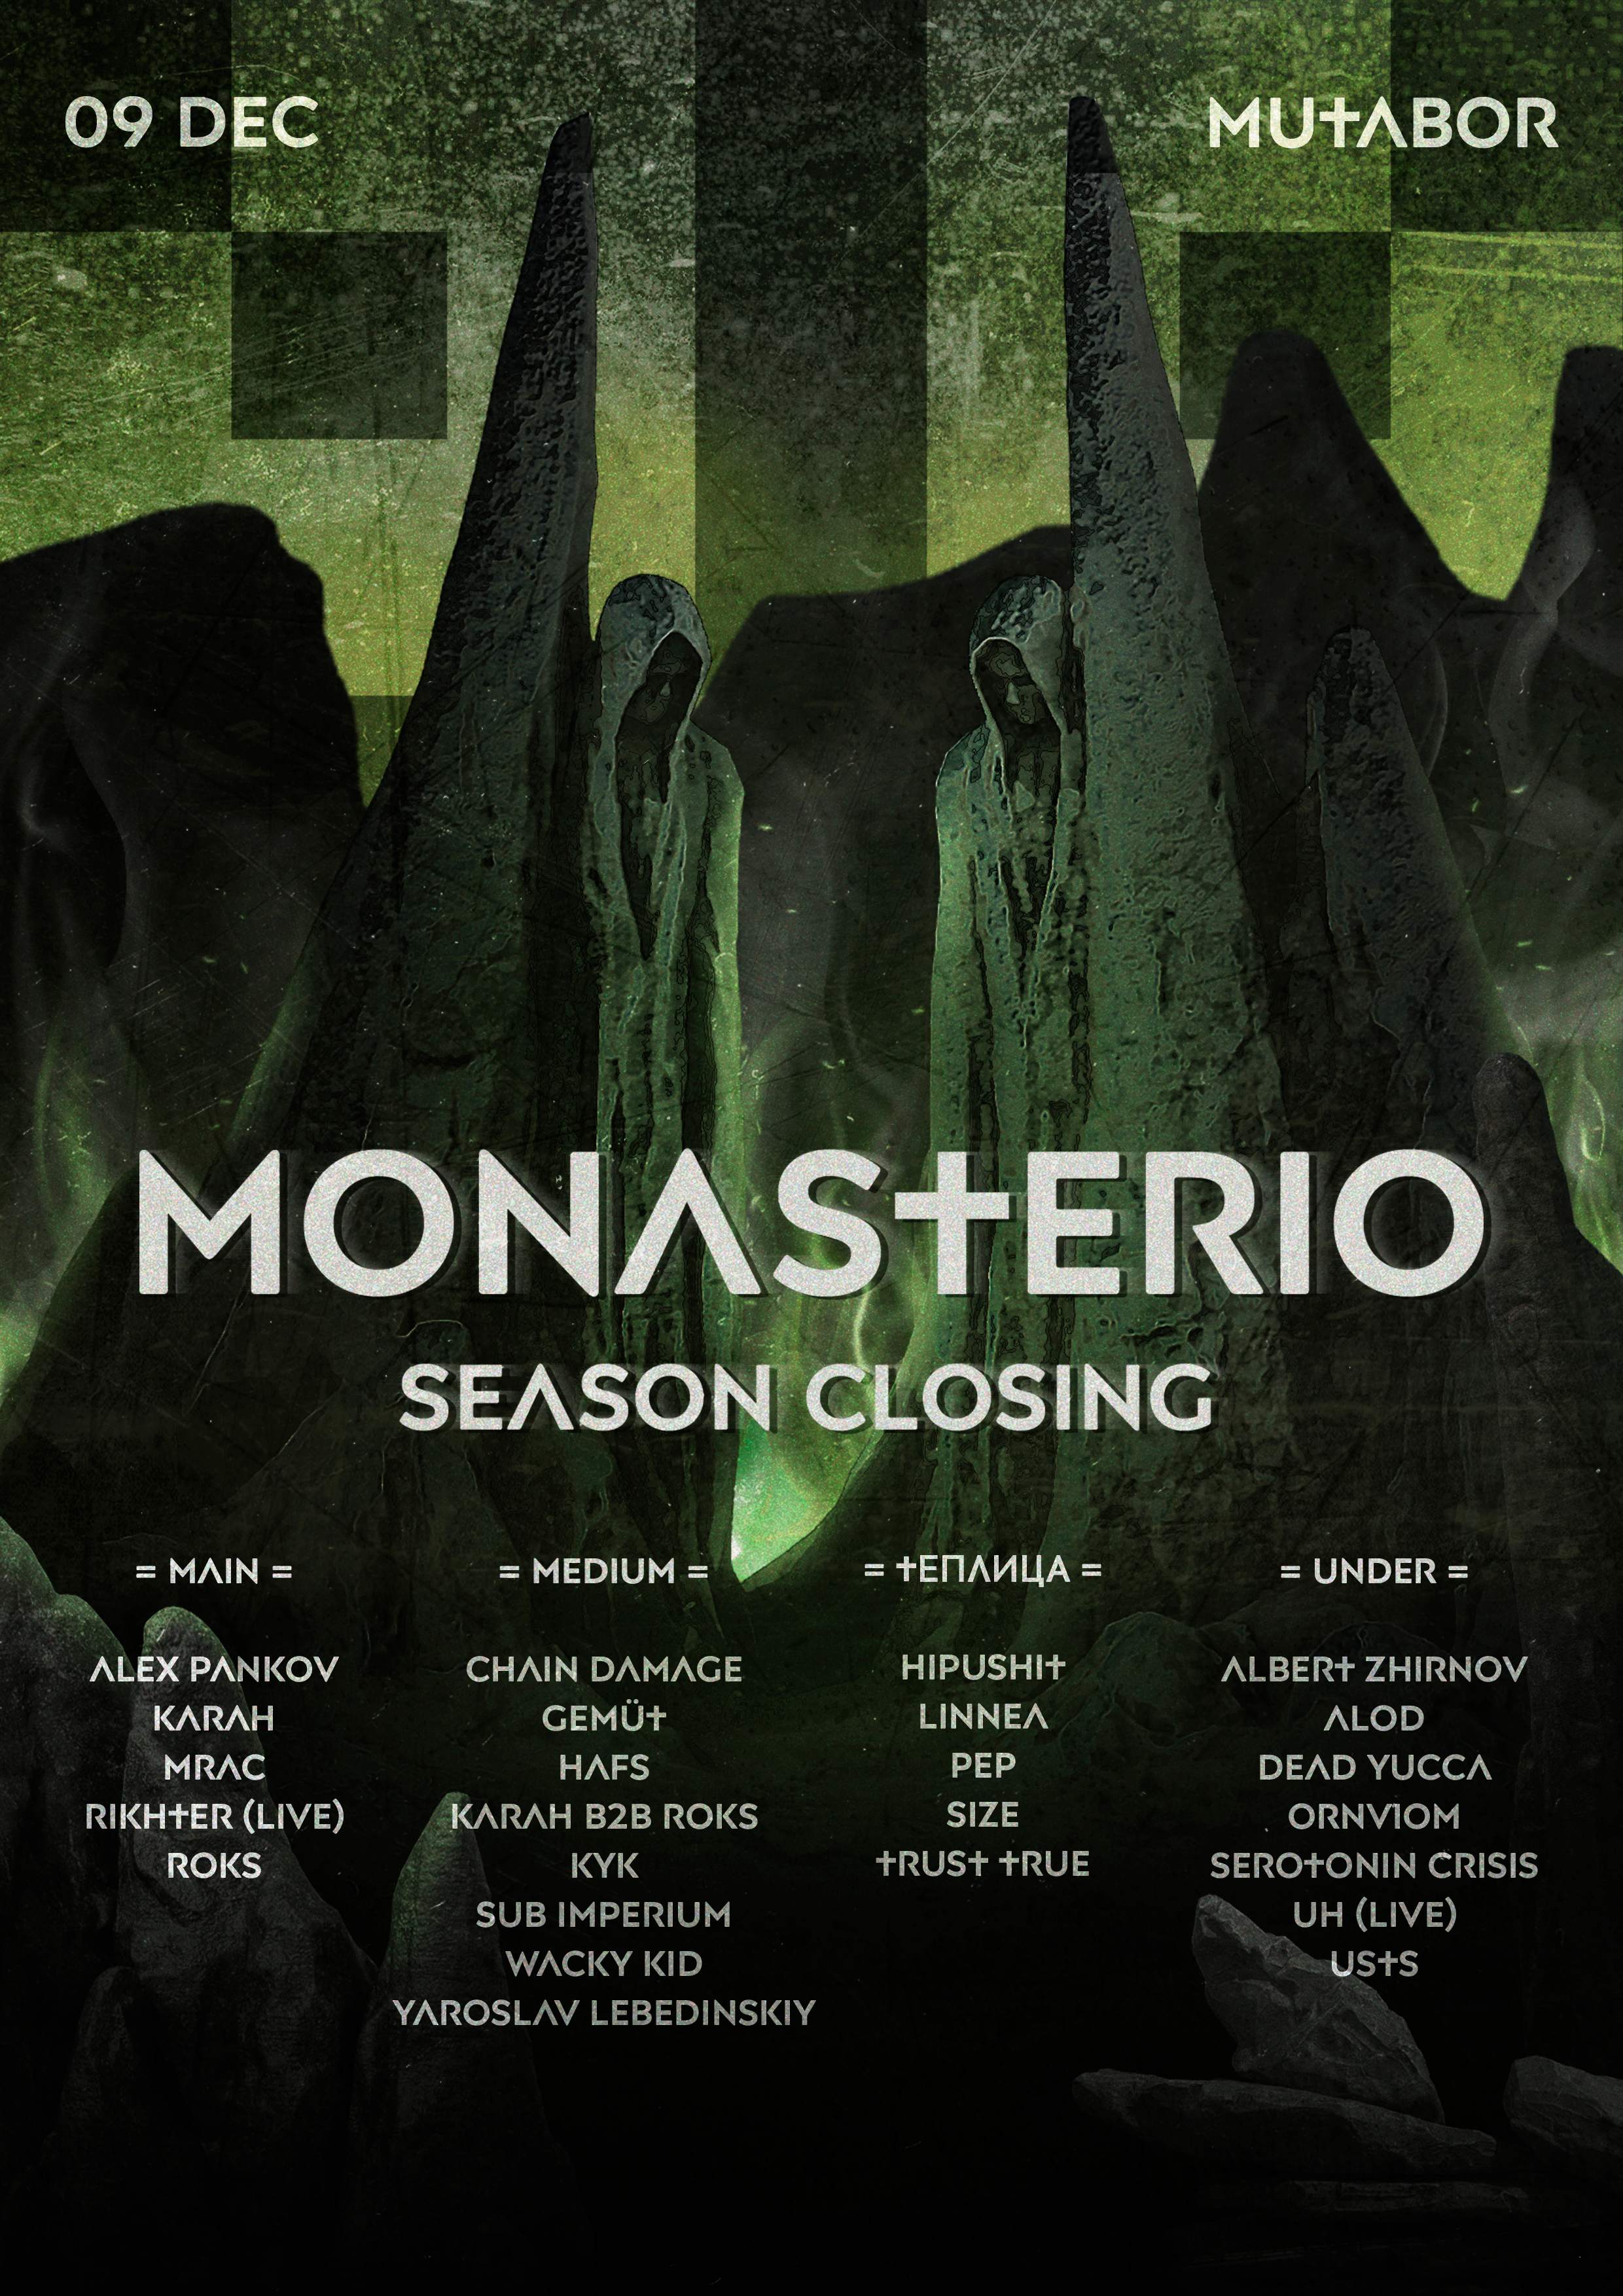 Monasterio Season Closing - フライヤー表